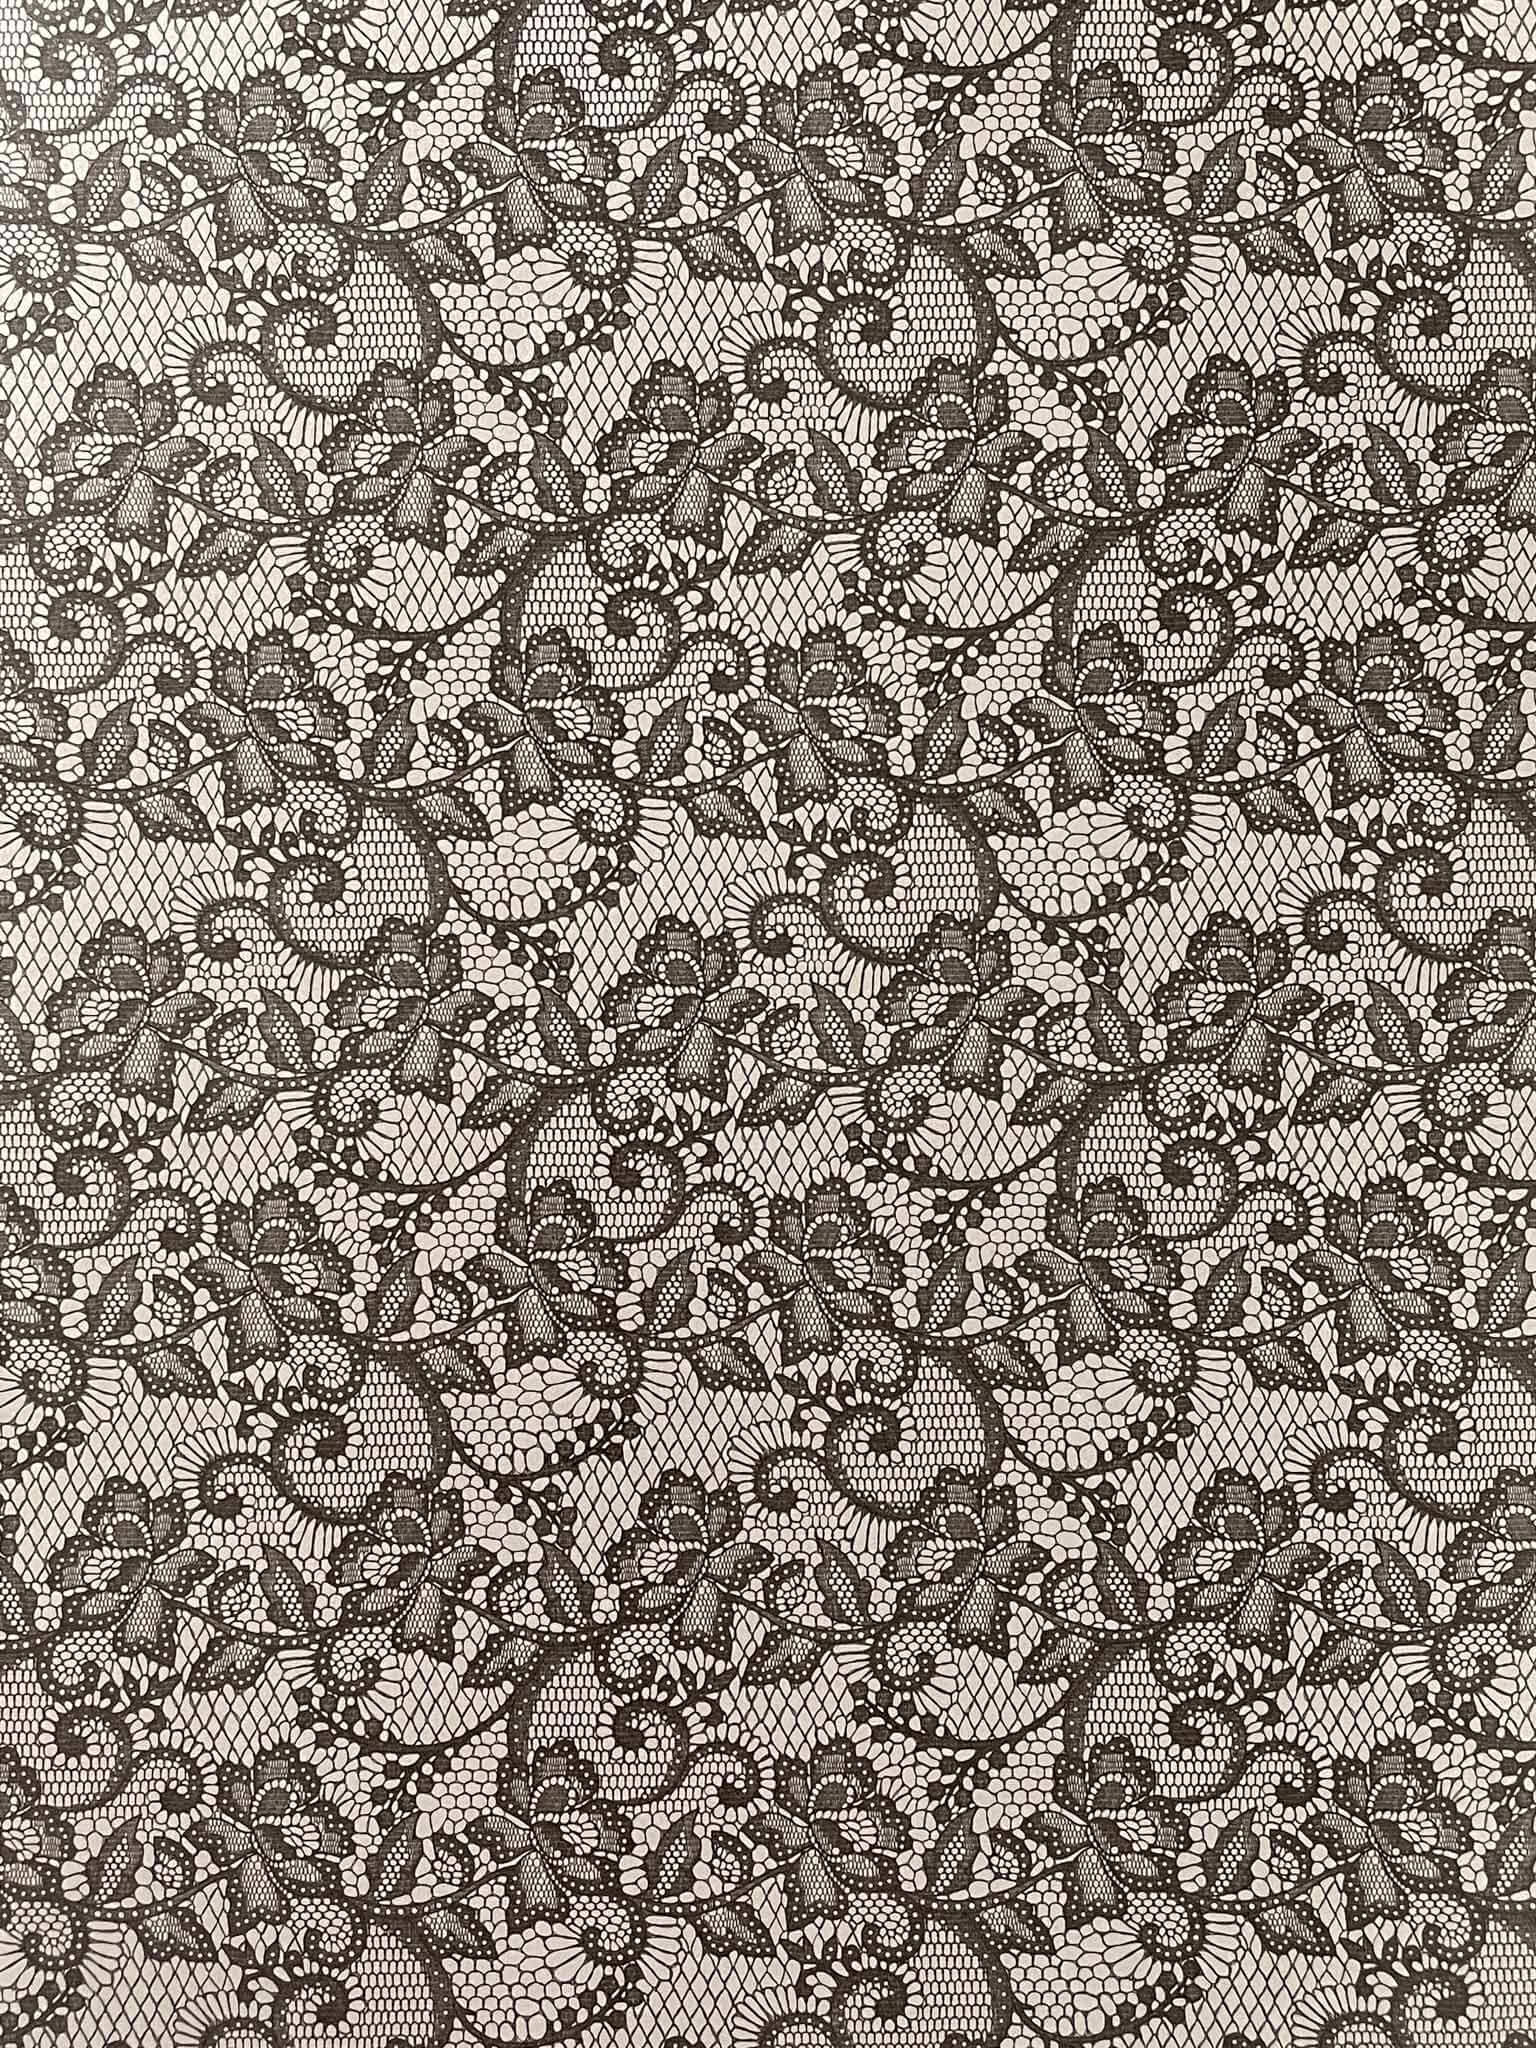 lace-pattern-a4-paper-in-black